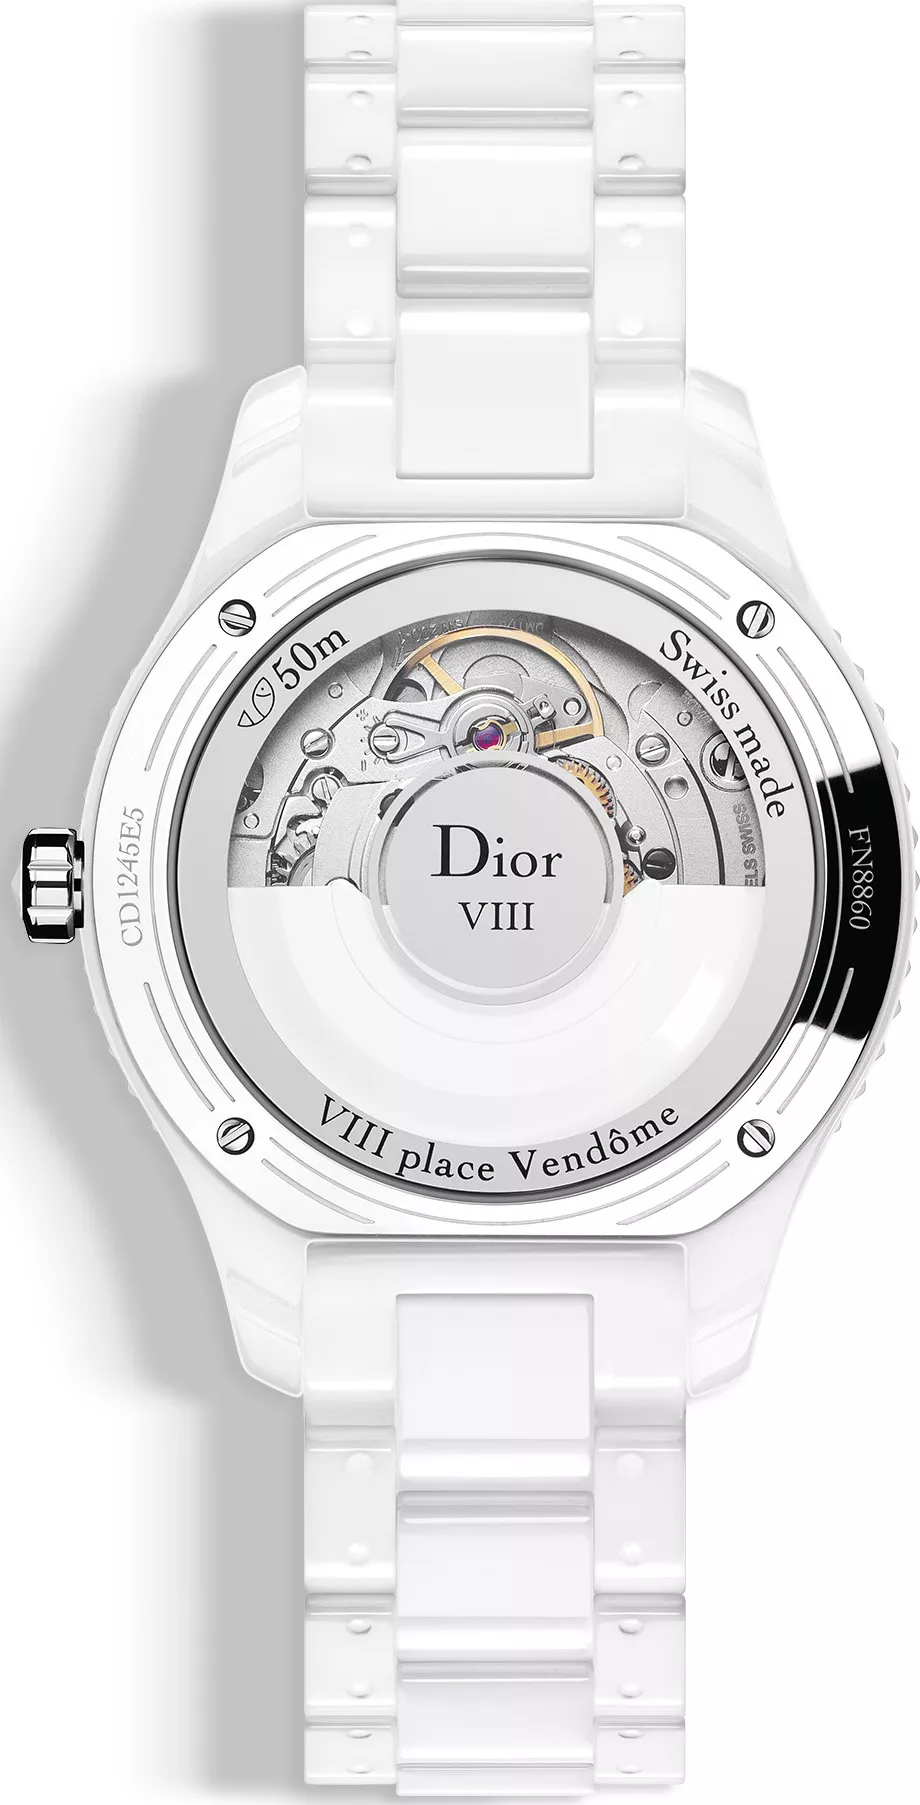 Christian Dior Dior VIII CD1245E5C001 Automatic 38